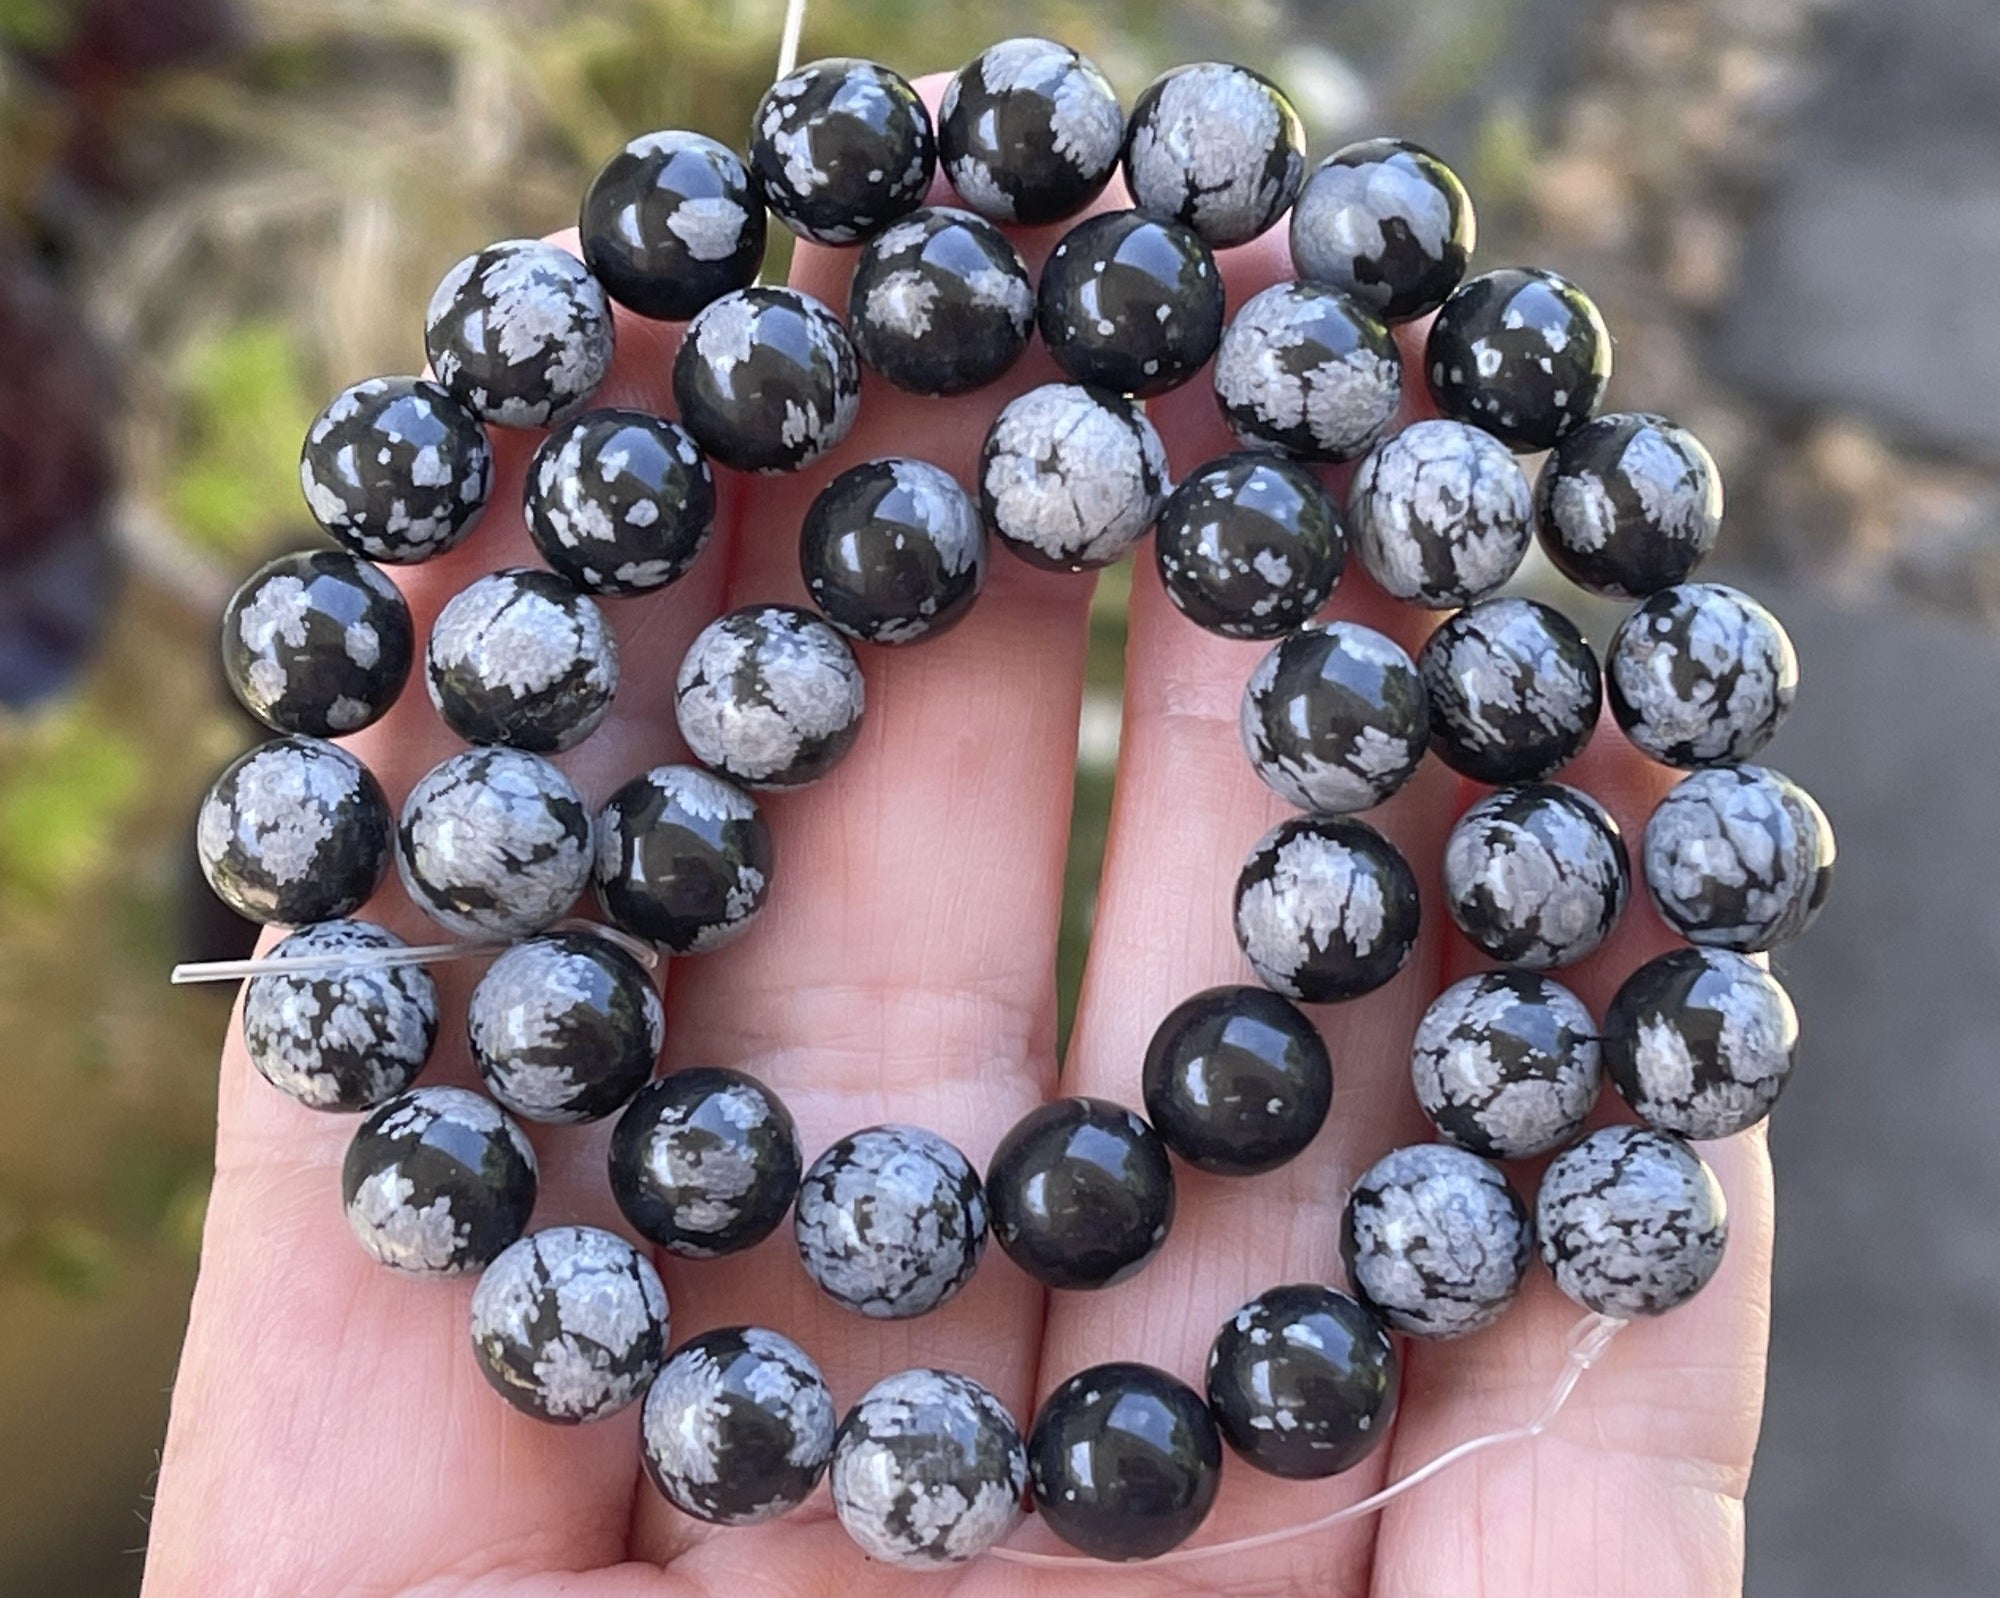 Snowflake Obsidian polished 8mm round gemstone beads 15" strand - Oz Beads 